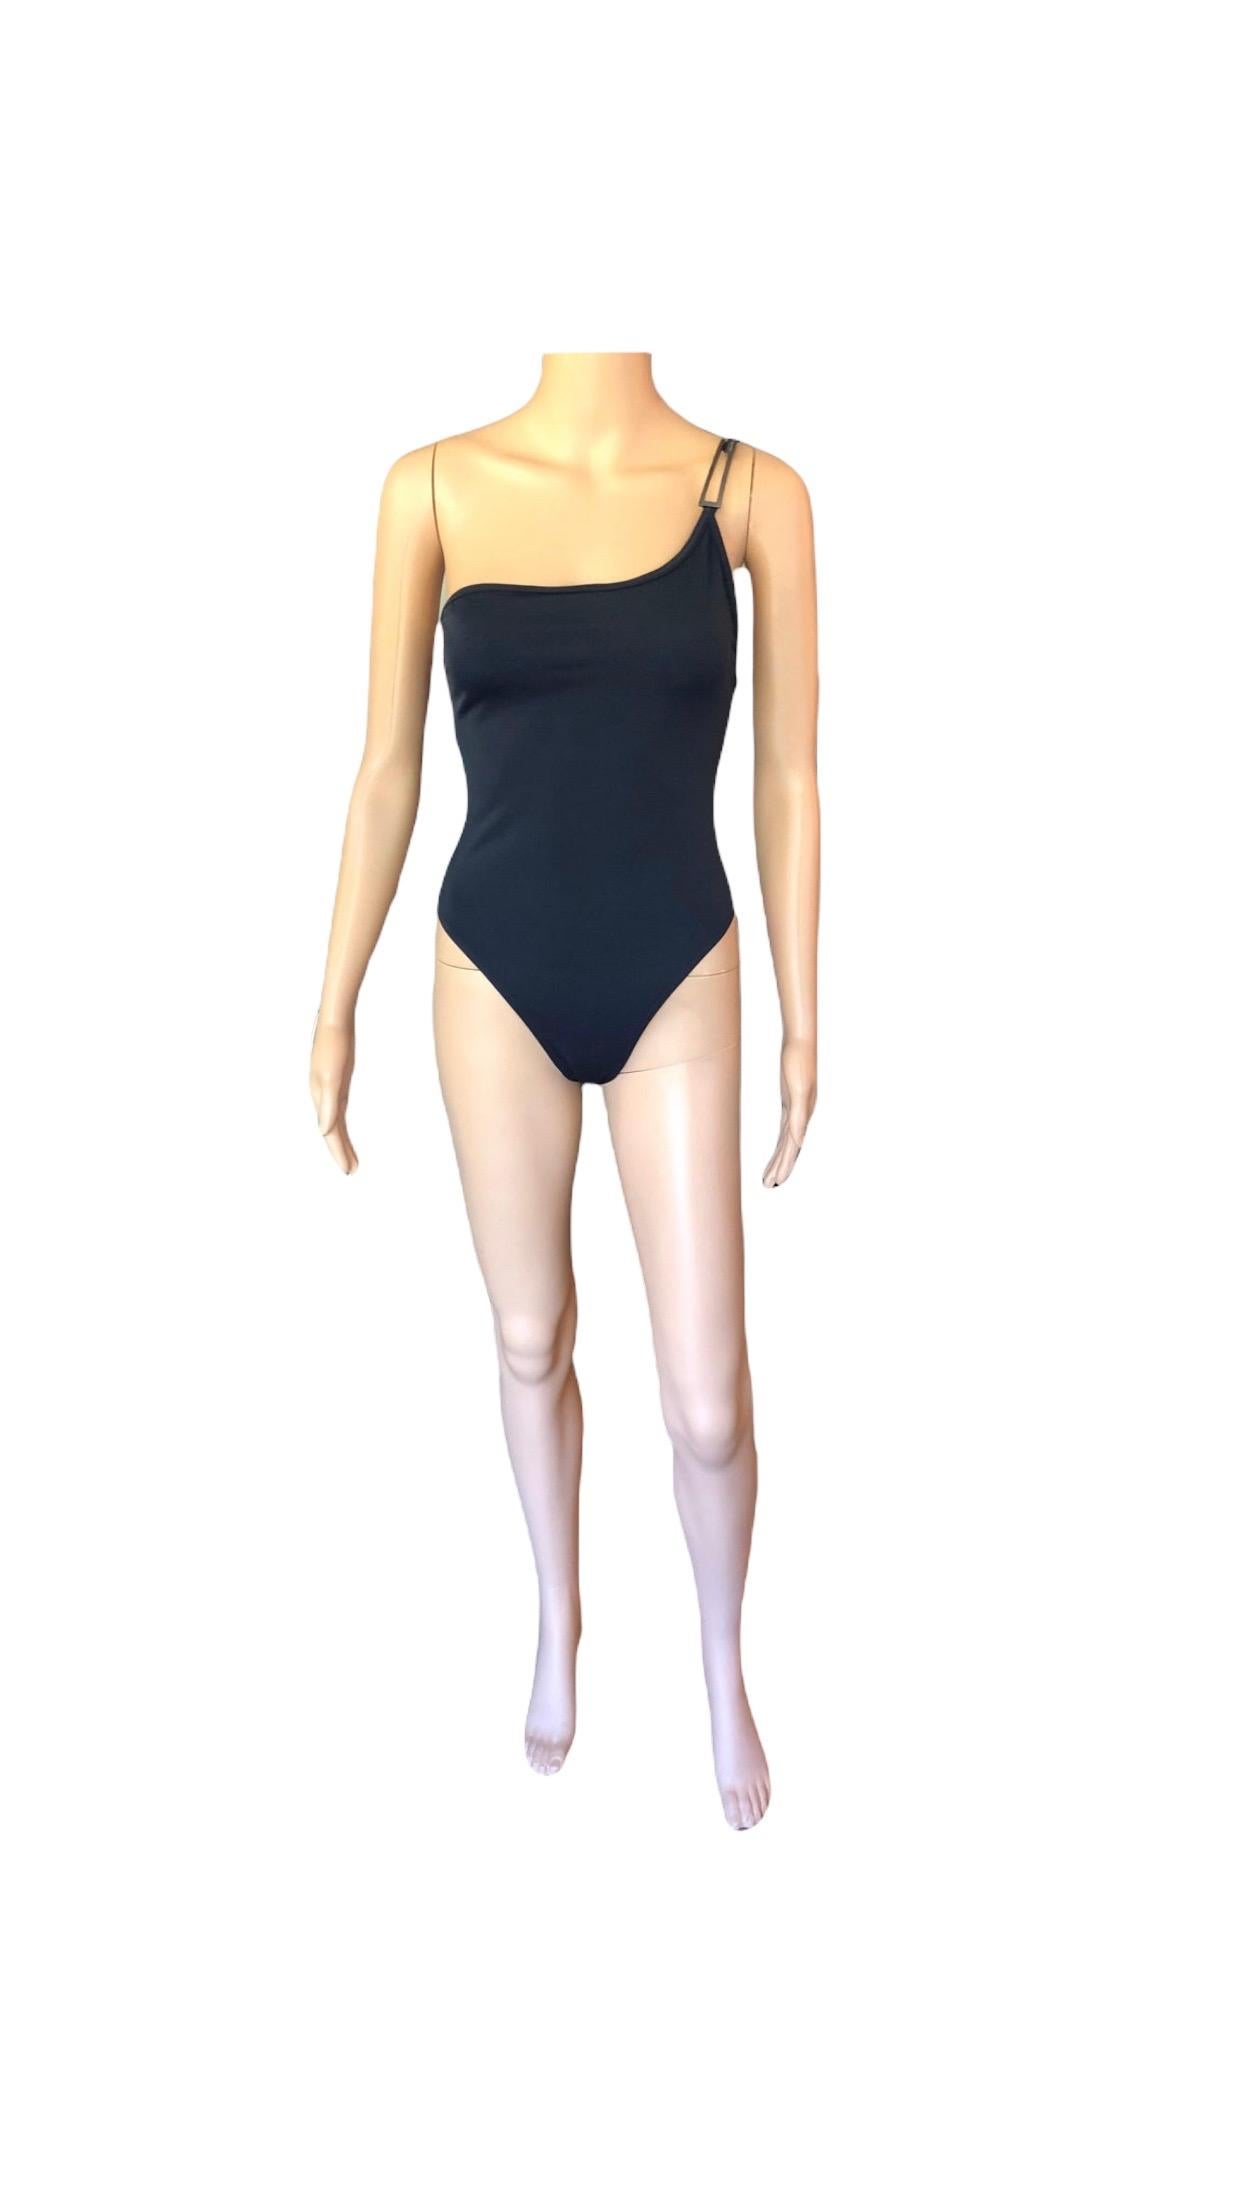 Tom Ford for Gucci S/S 1998 Runway G Logo One Shoulder Black Bodysuit Swimsuit  3